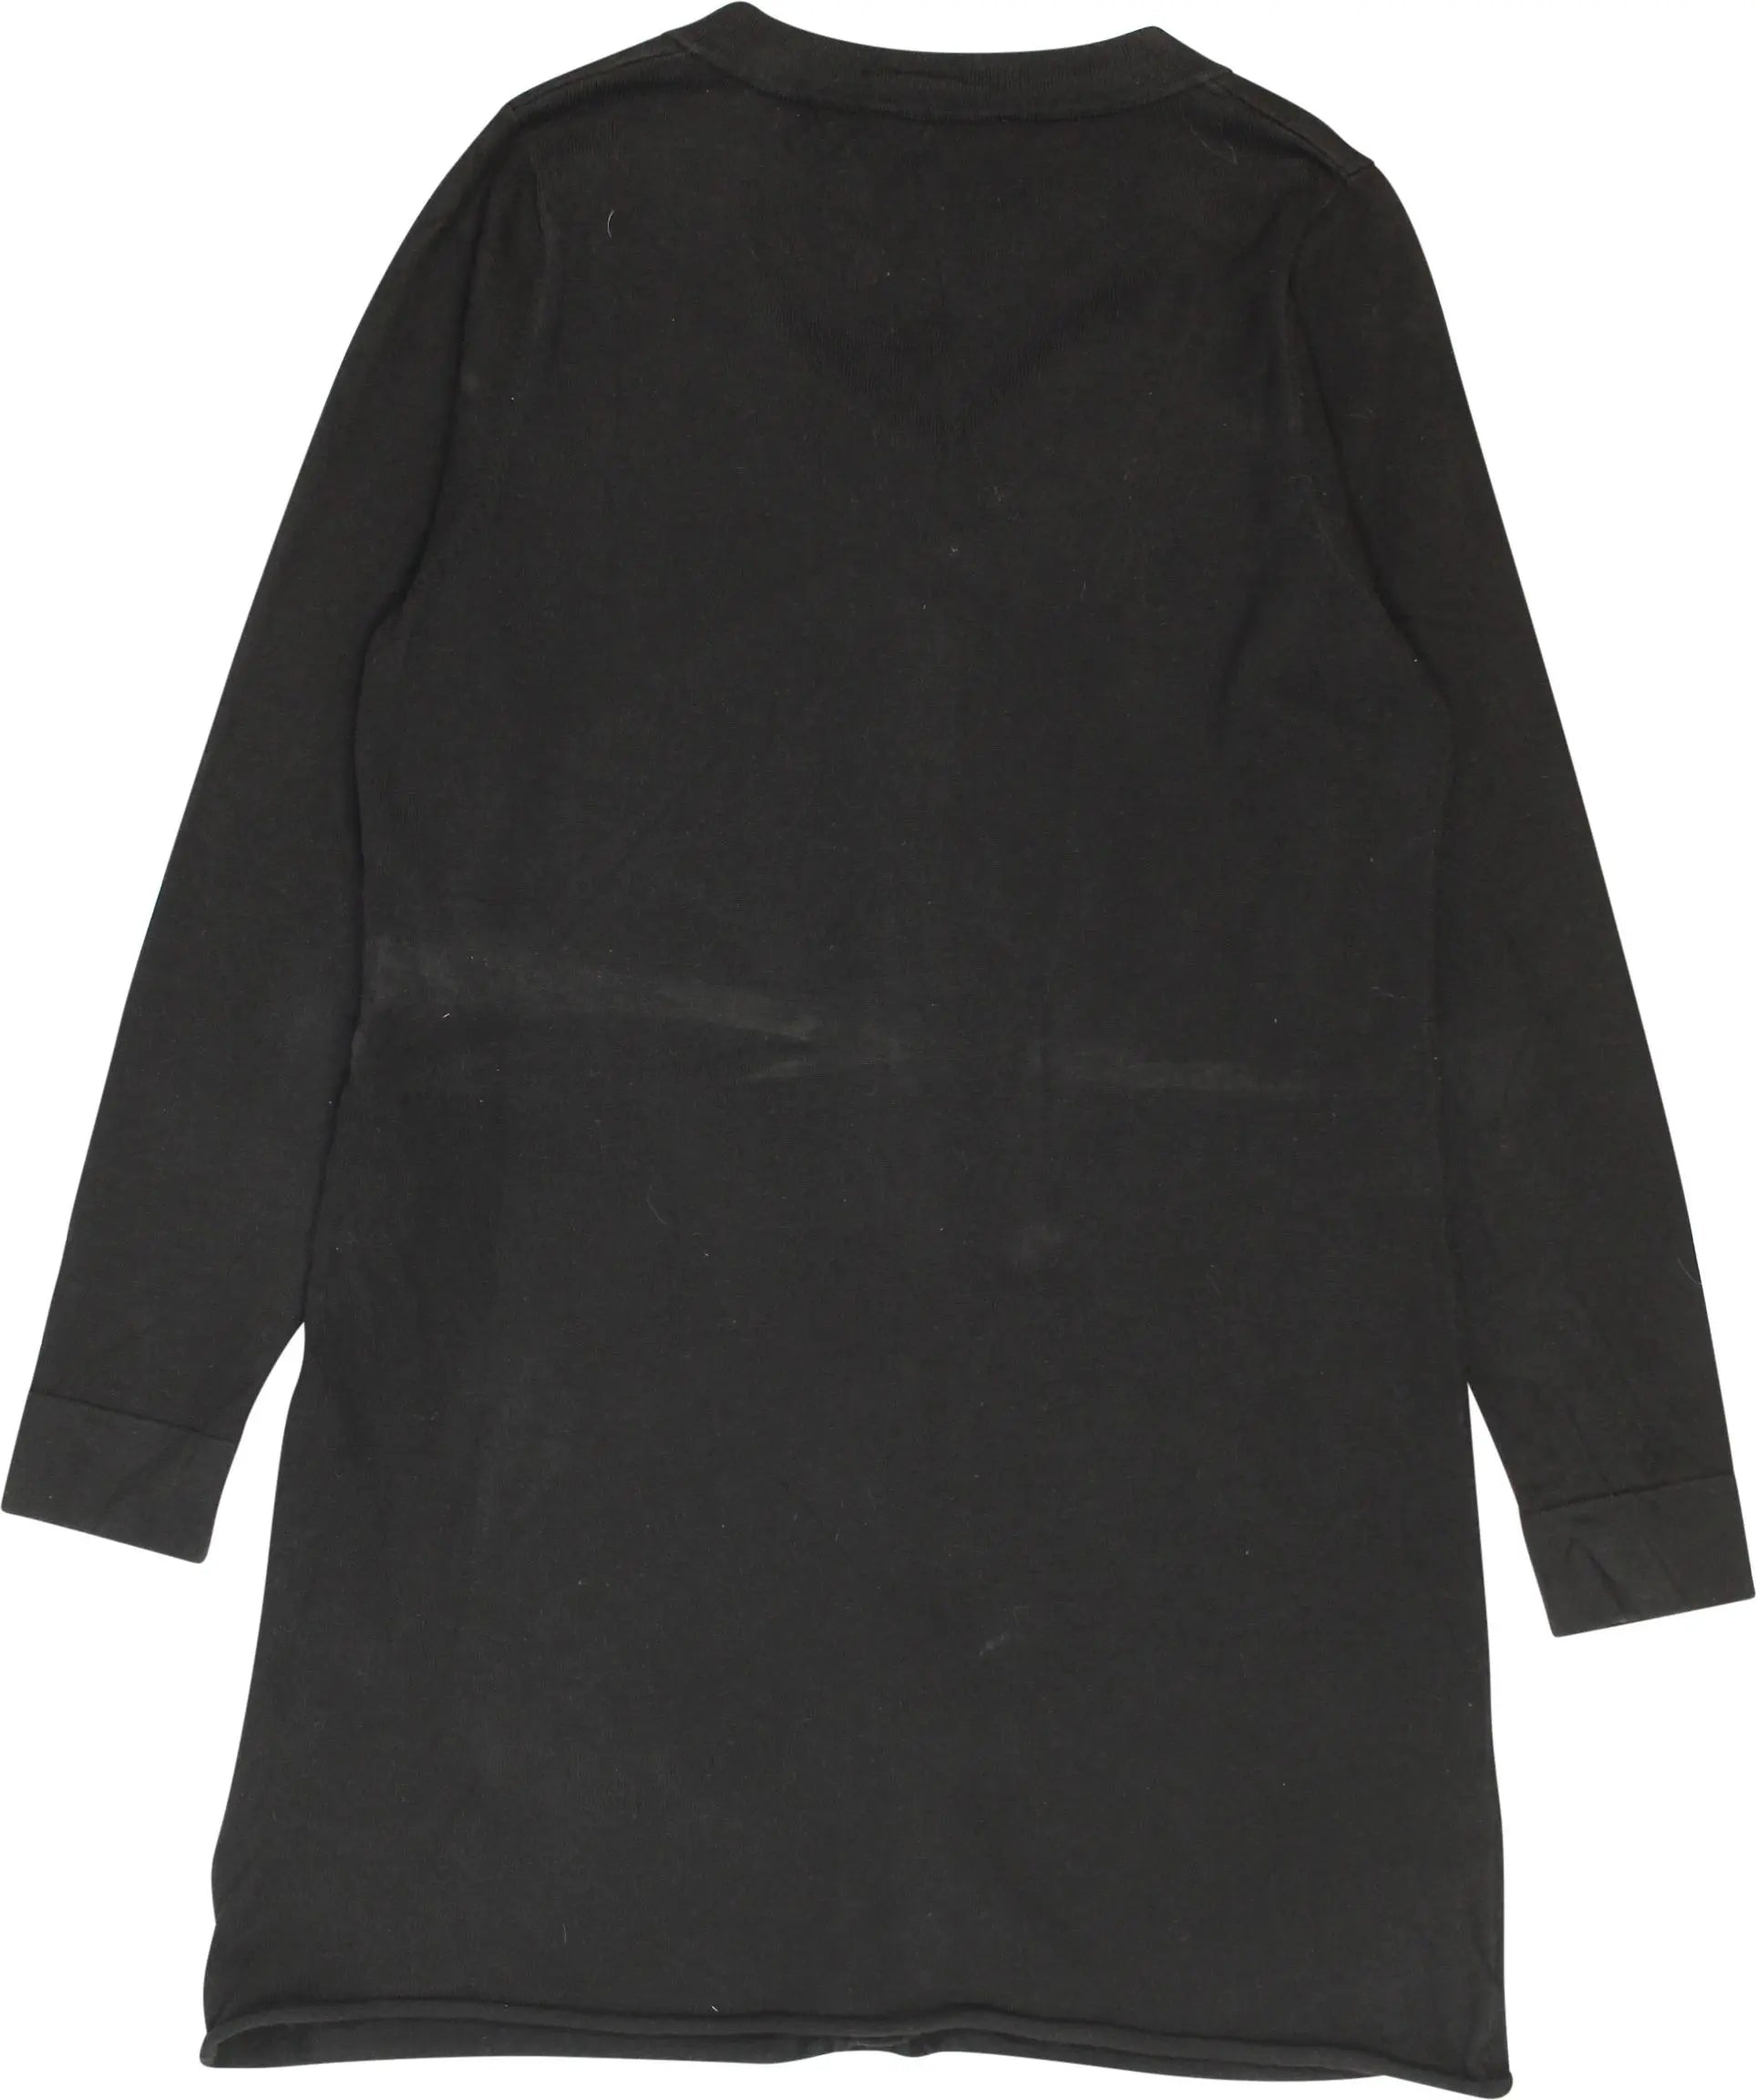 HEMA - Black Cardigan- ThriftTale.com - Vintage and second handclothing